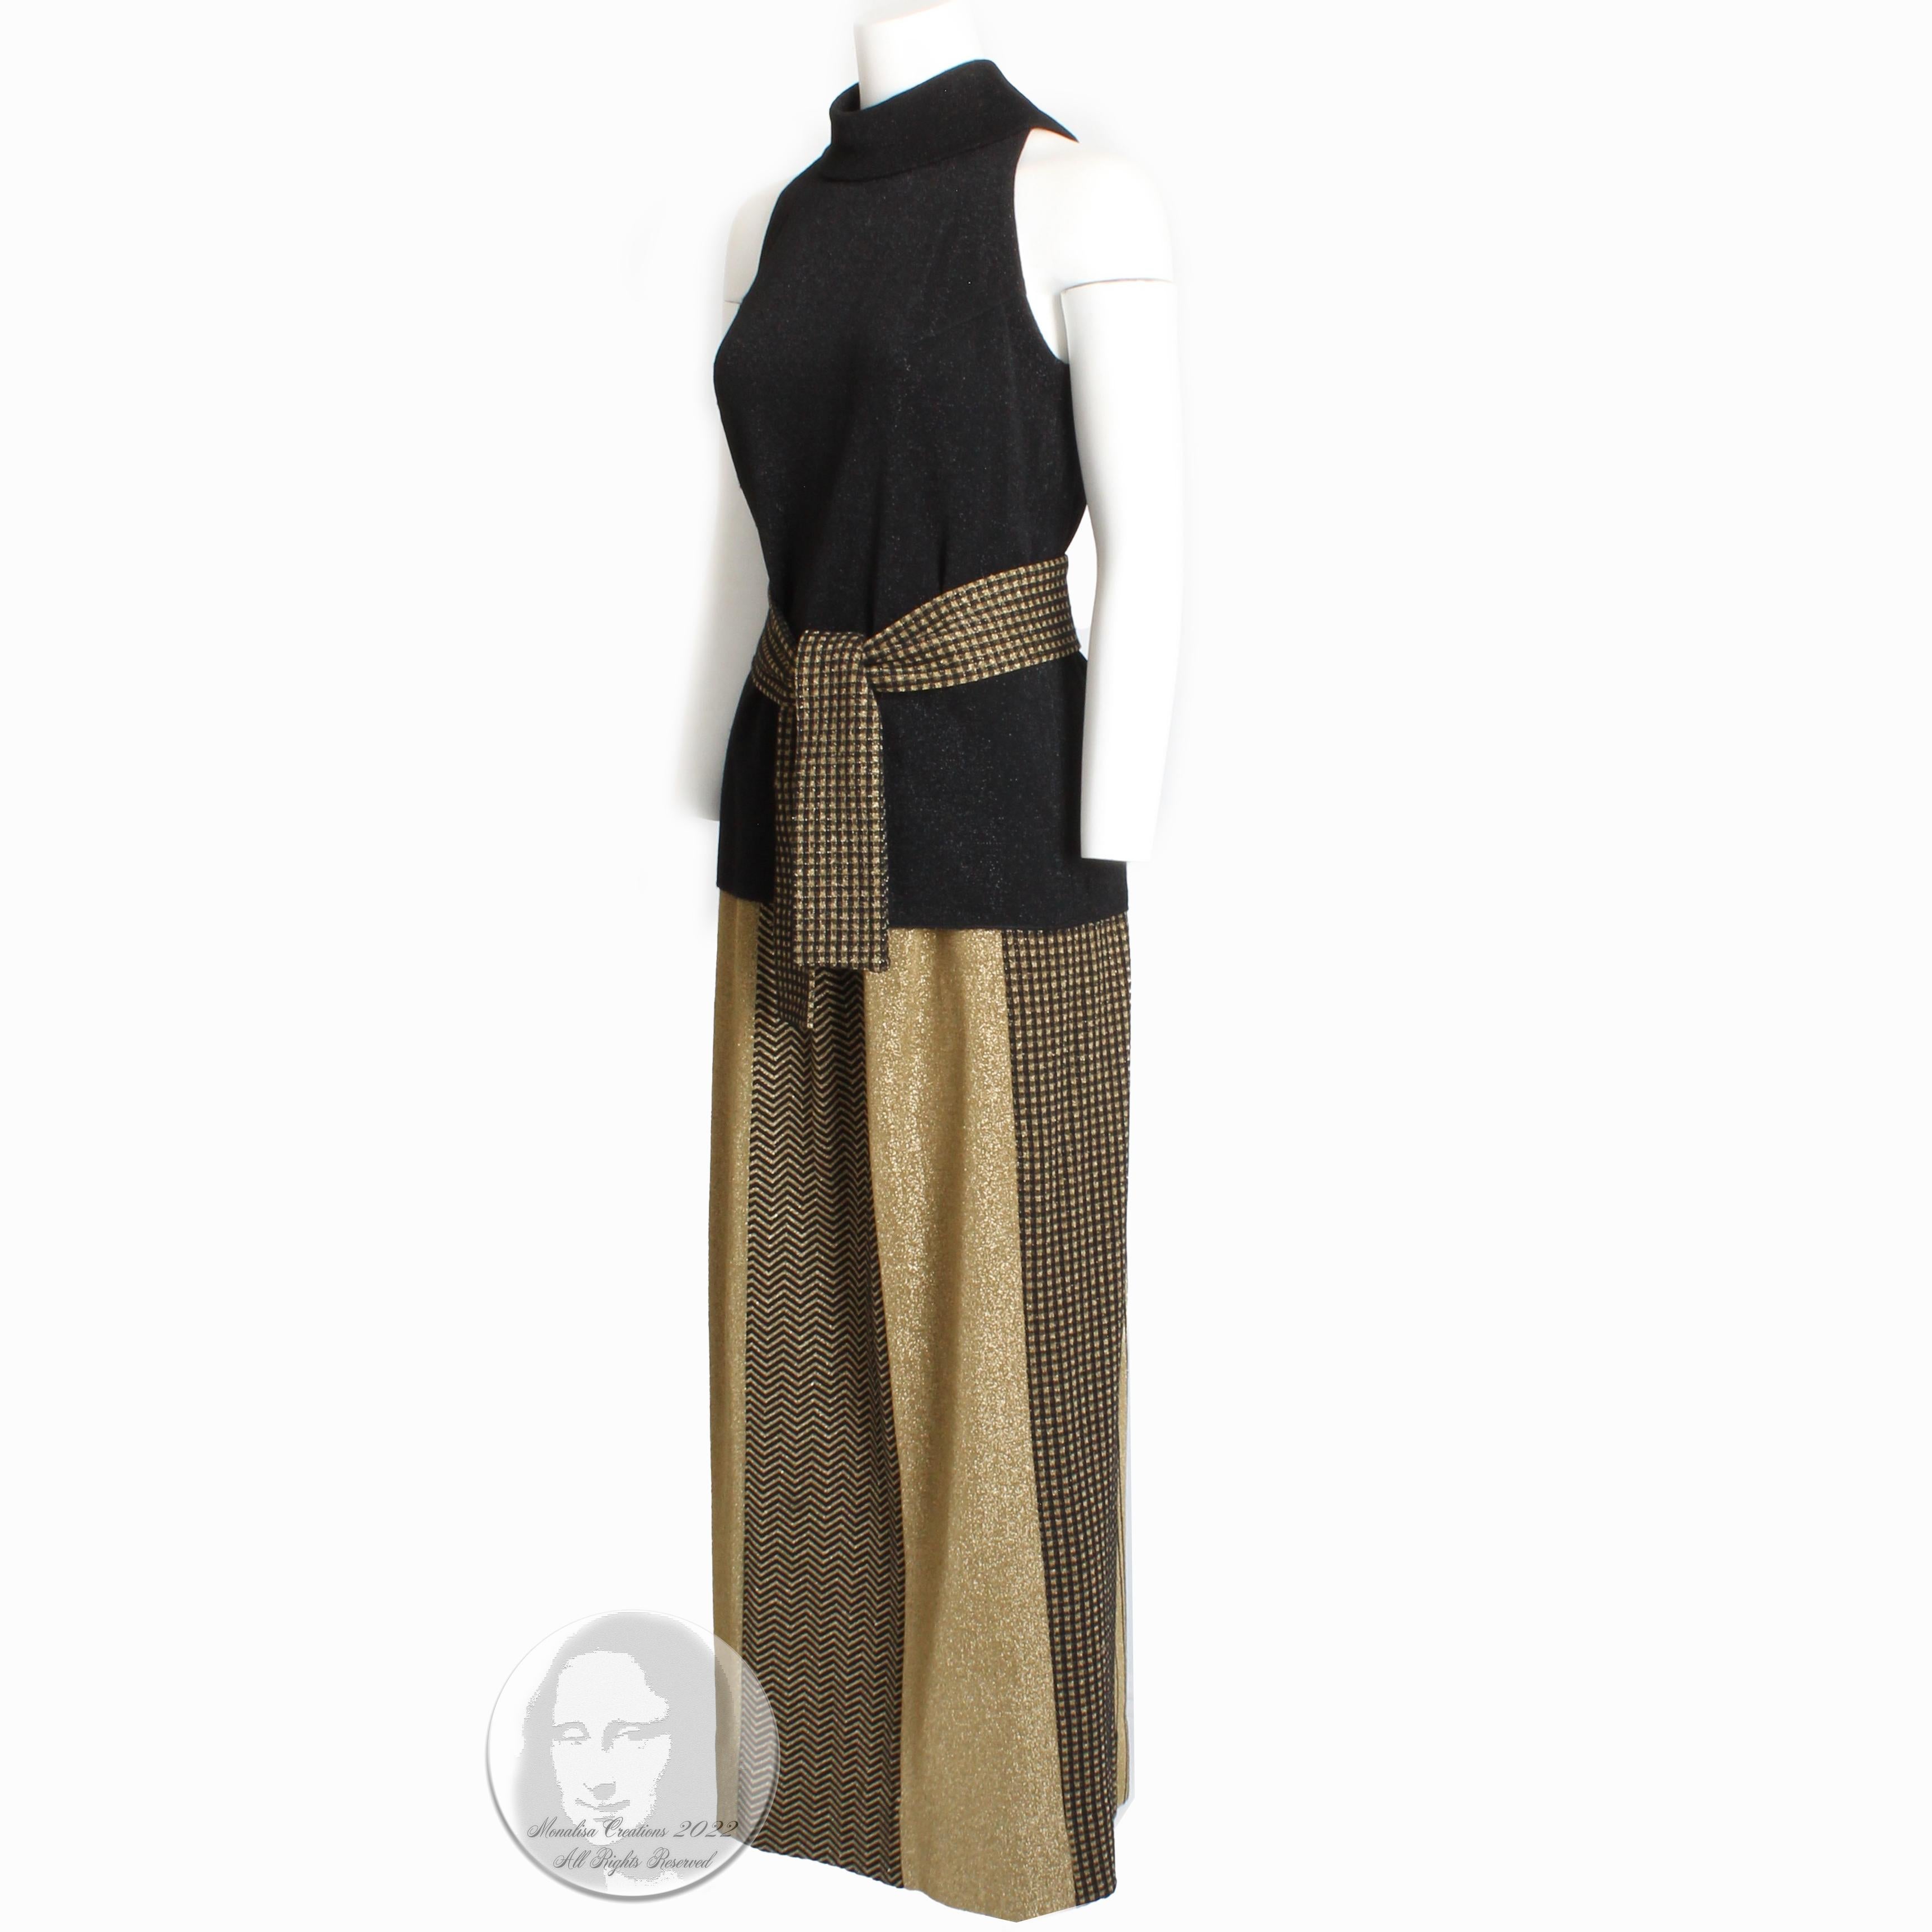 Women's or Men's Rudi Gernreich Suit 3pc Top Skirt Sash Belt Black Gold Metallic Knit Vintage 70s